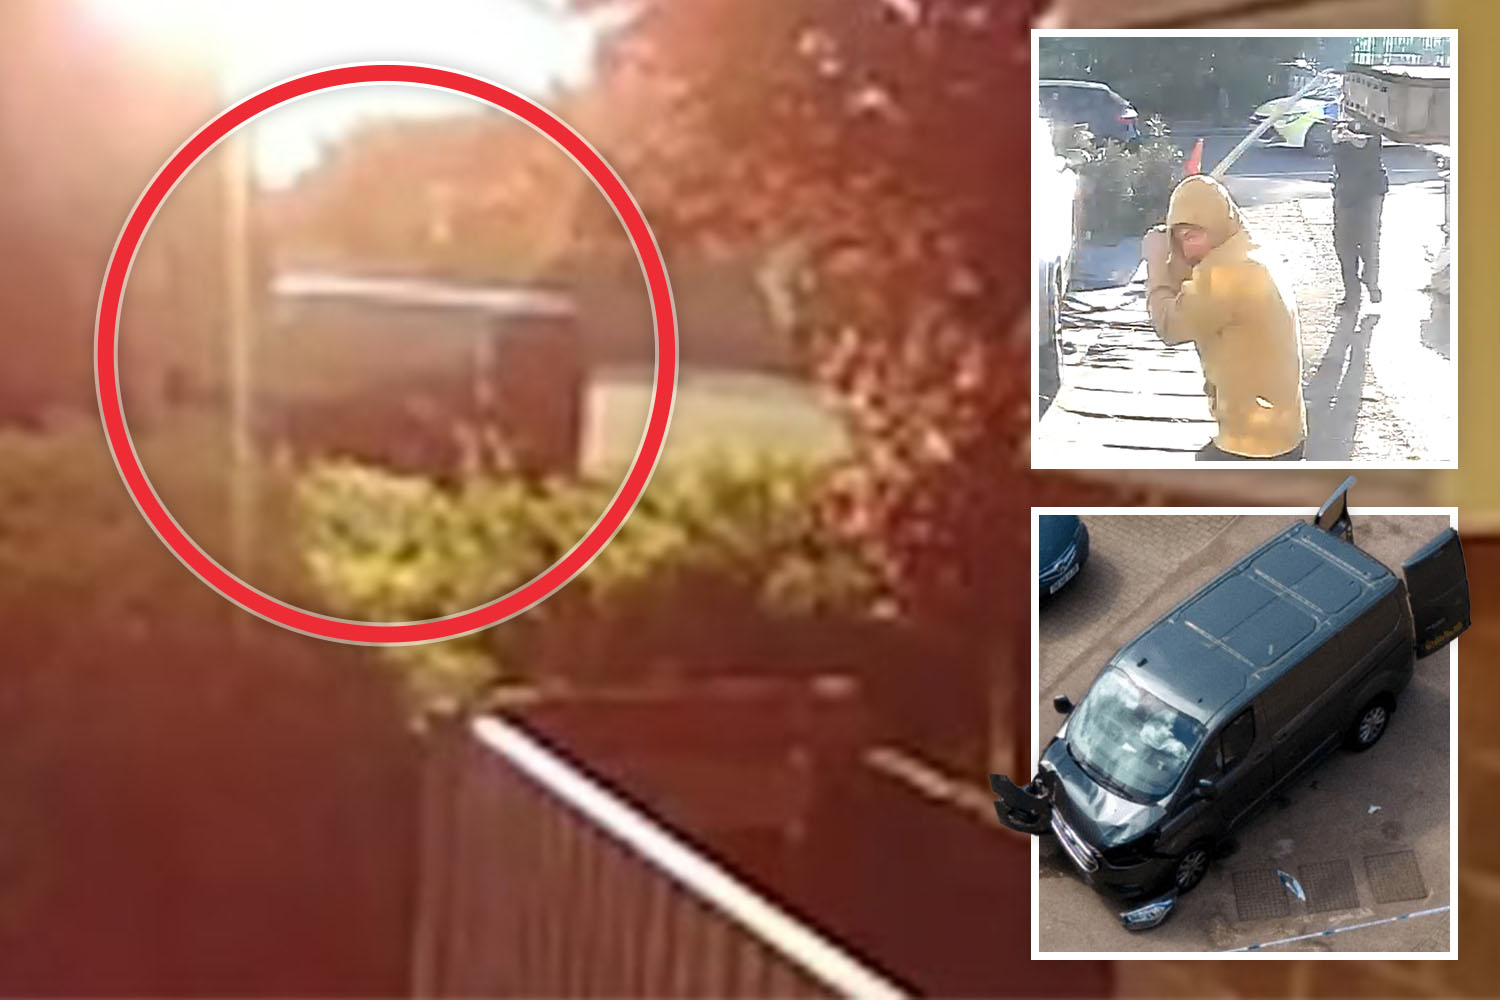 Shock moment van hits pedestrian before sword-wielding man 'goes on rampage'